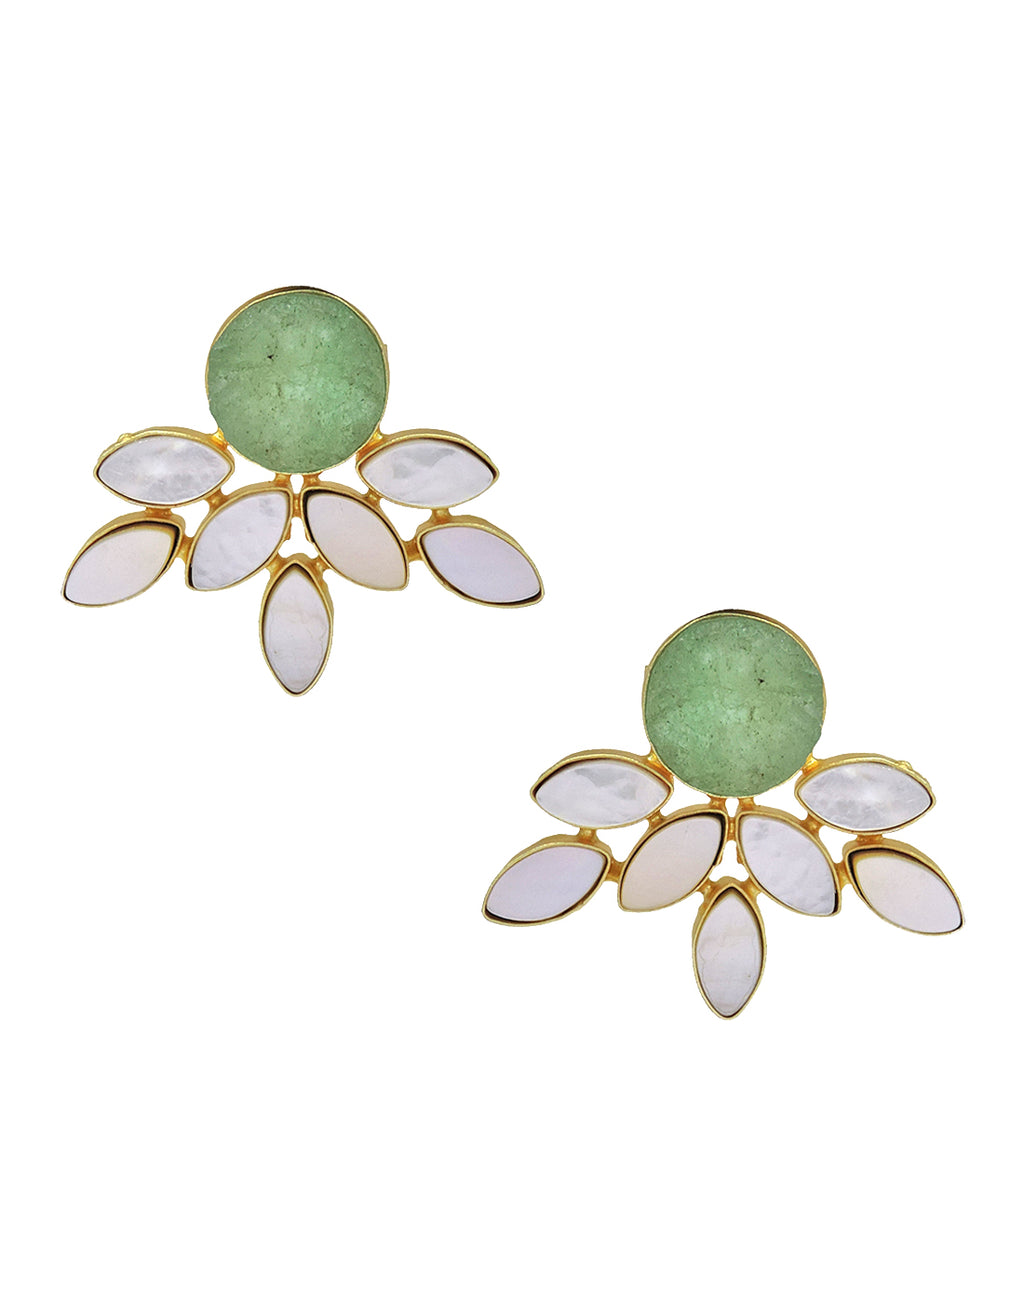 Firework Earrings (Green Fluorite) - Statement Earrings - Gold-Plated & Hypoallergenic - Made in India - Dubai Jewellery - Dori